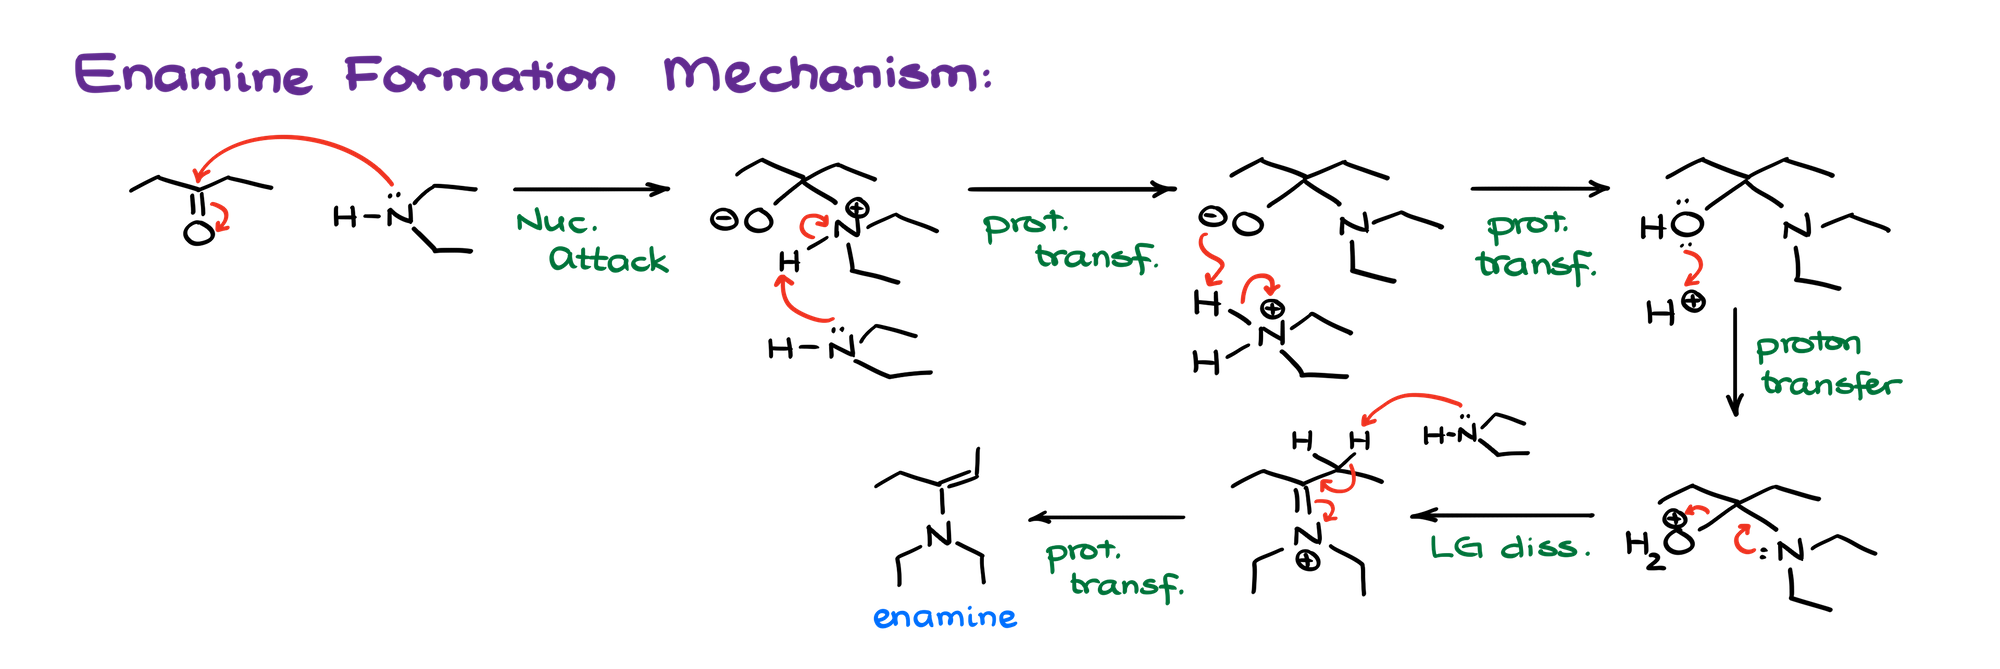 enamine formation mechanism